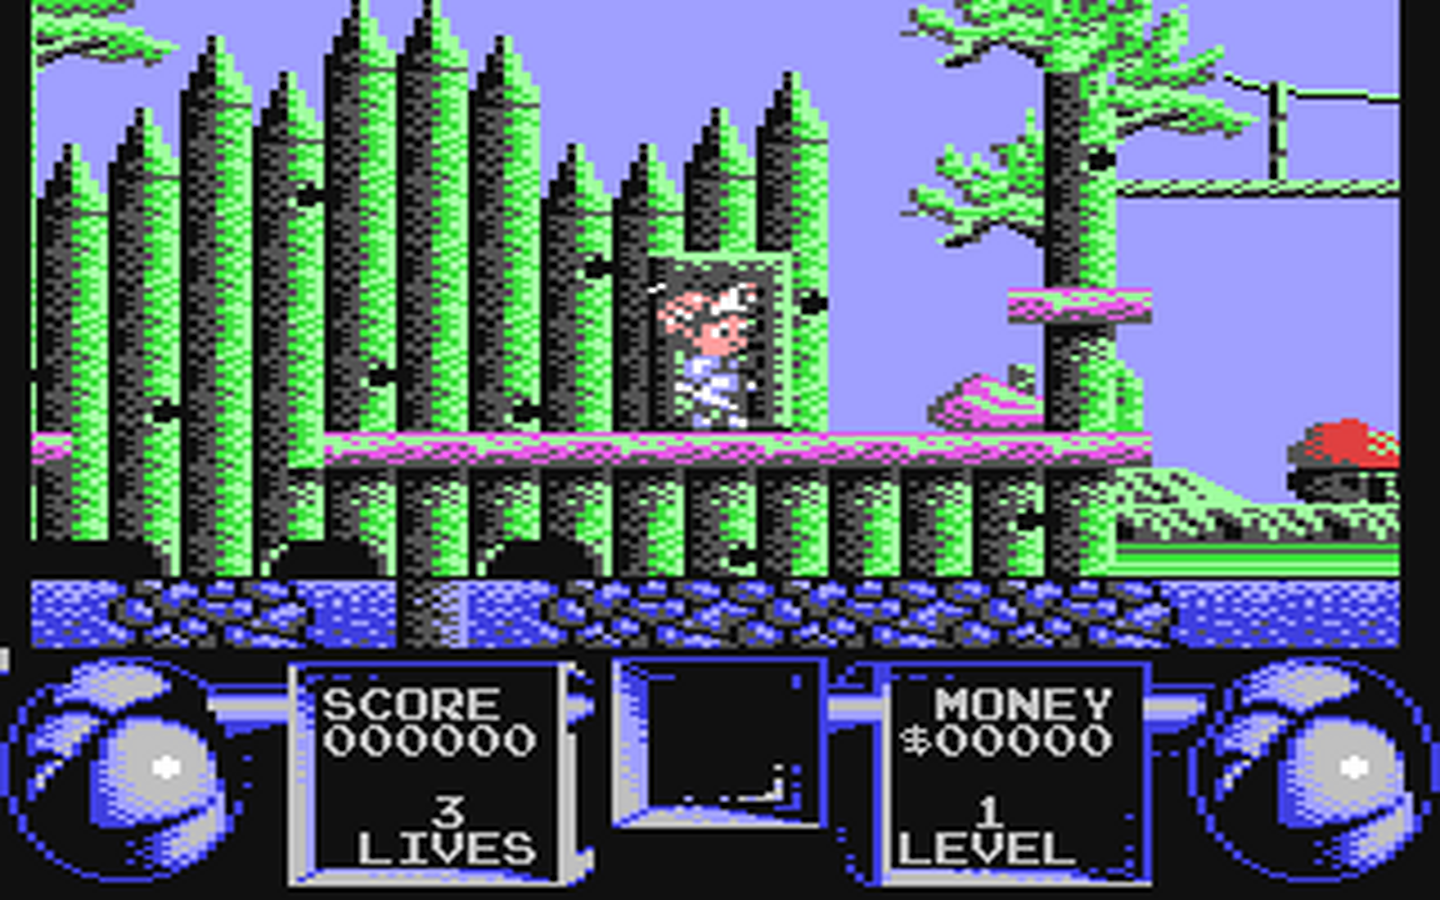 C64 GameBase Flimbo's_Quest System_3 1990